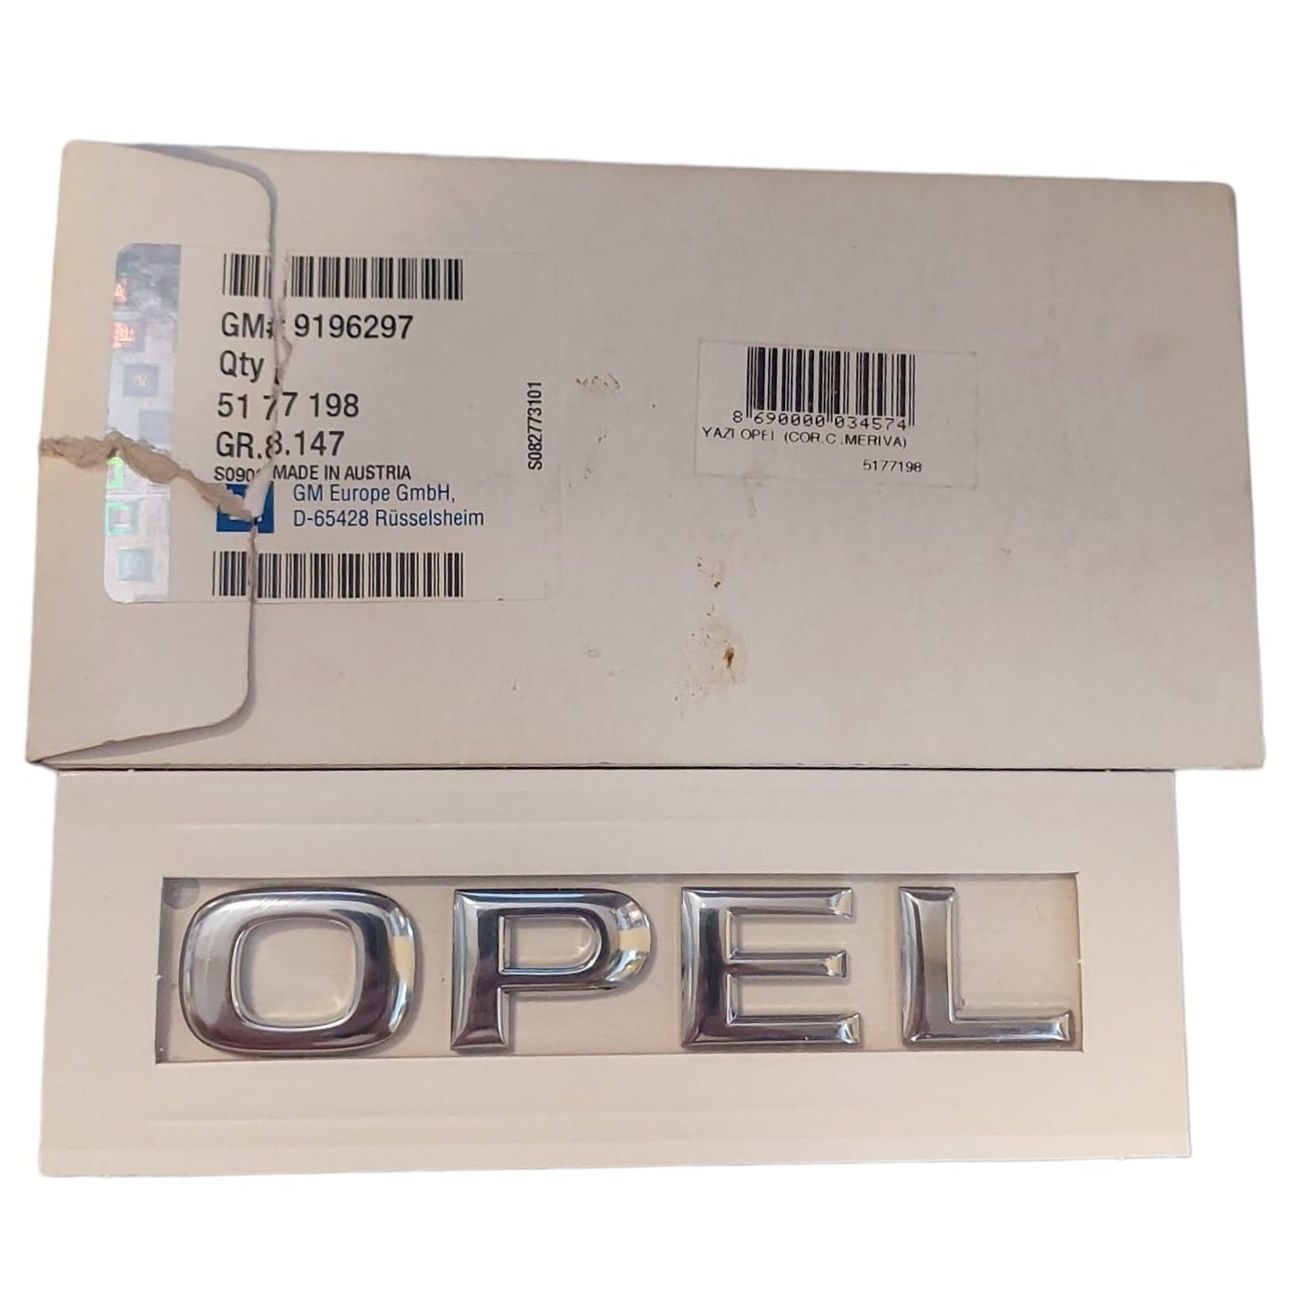 Opel Corsa C '' OPEL '' Bagaj Yazısı Orijinal GM